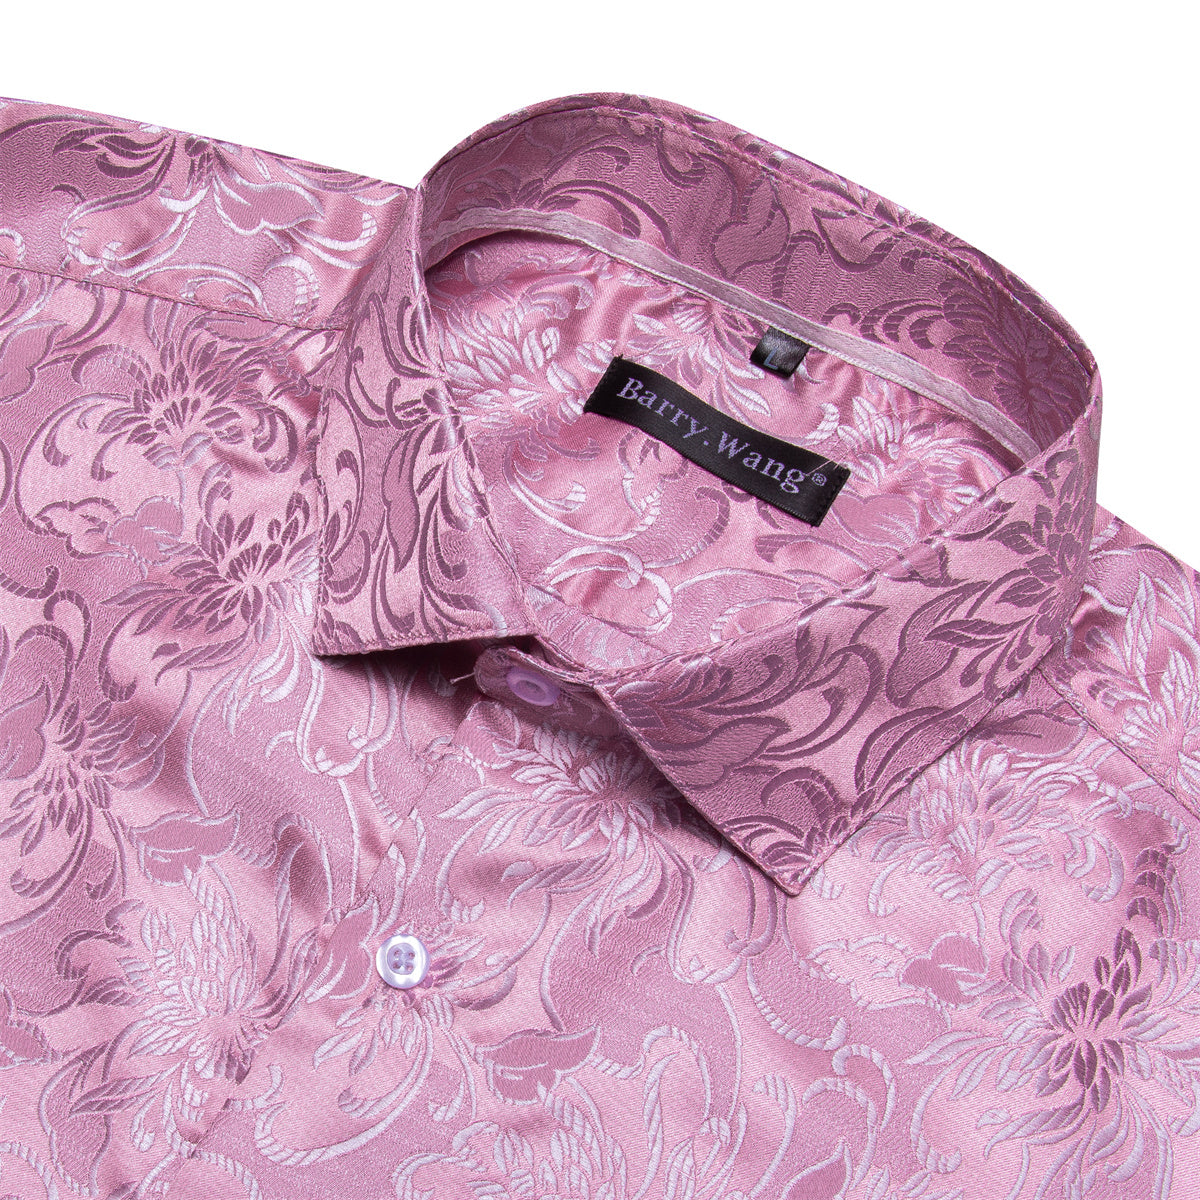 Barry.wang Men's Shirt Pink Paisley Silk Button Down Long Sleeve Shirt